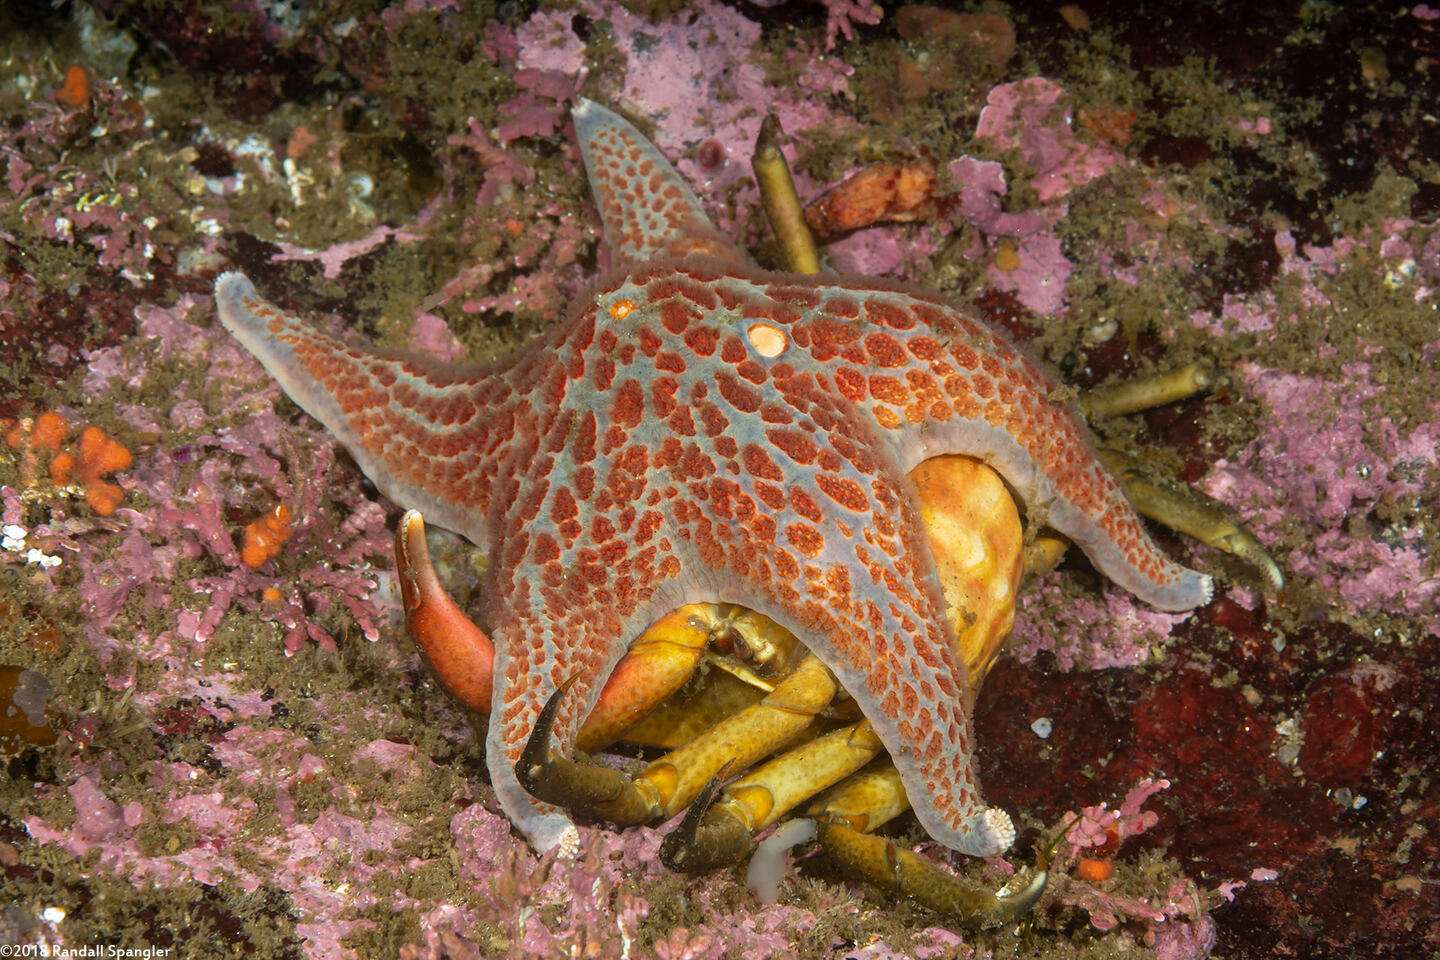 Dermasterias imbricata (Leather Star); Eating a northern kelp crab